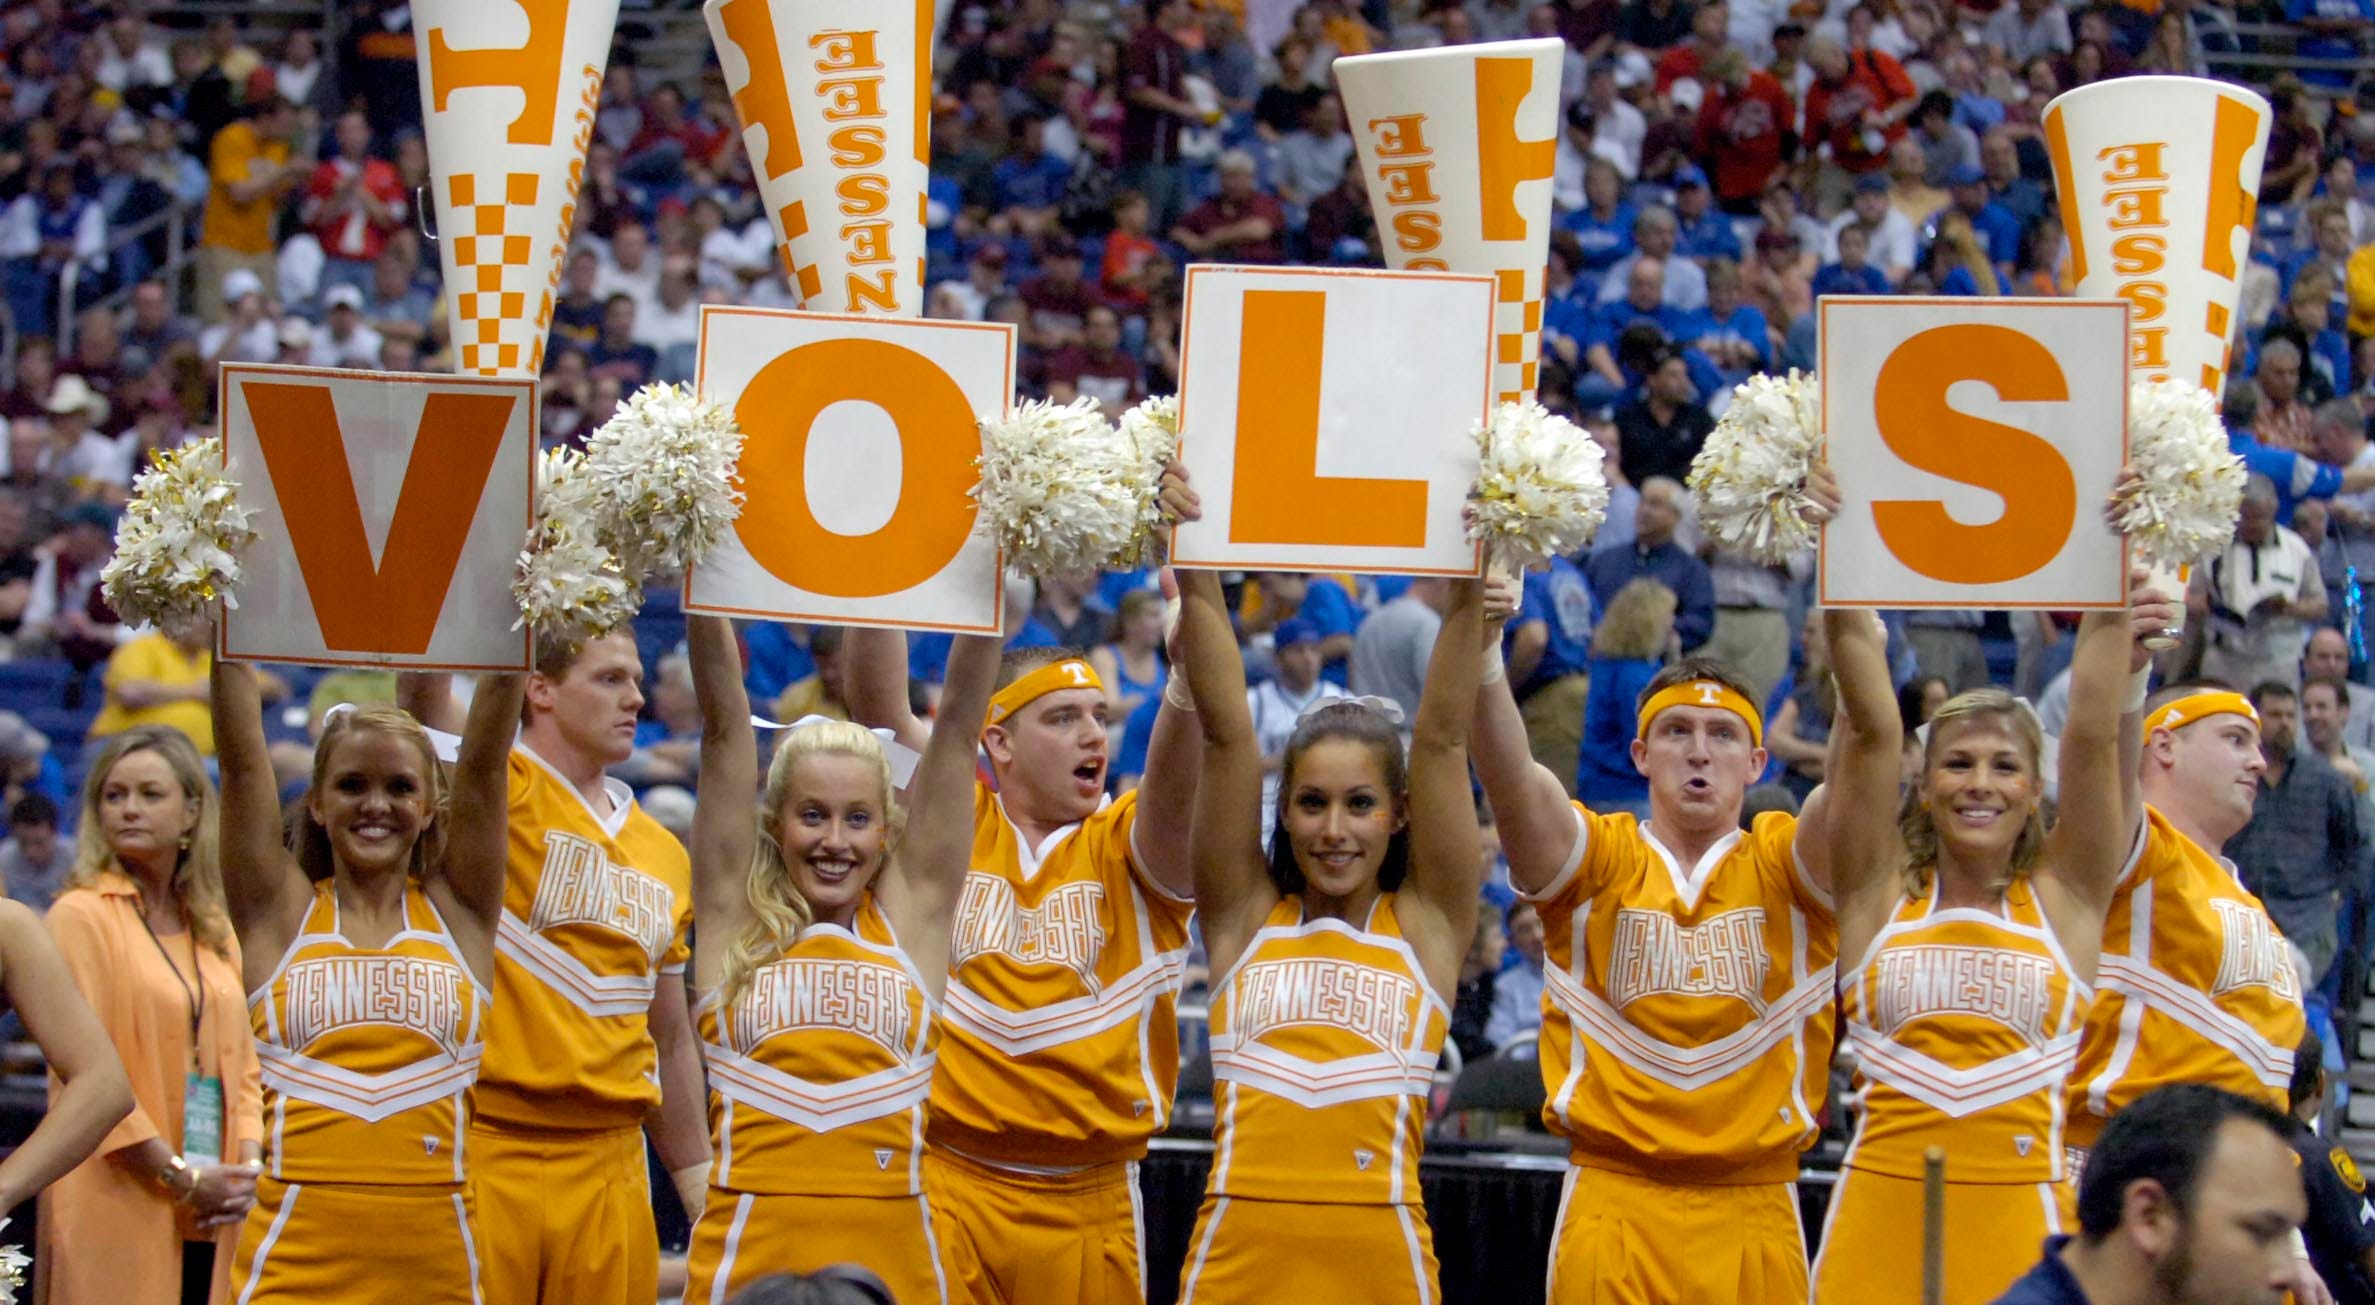 University of Tennessee cheerleaders through the years